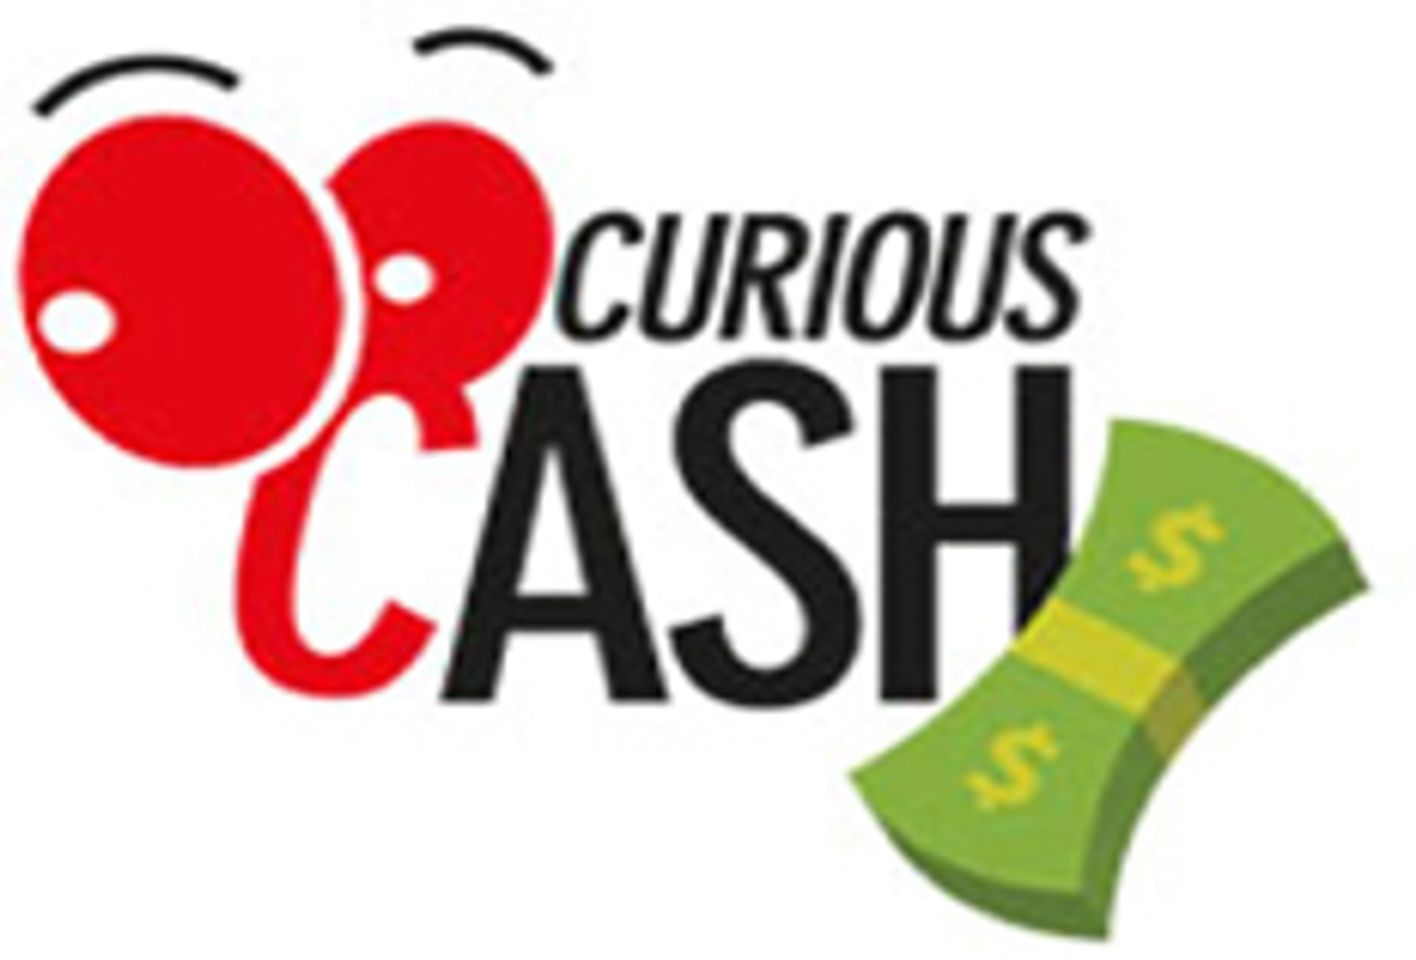 Curious Cash Offers 80 Percent Revshare